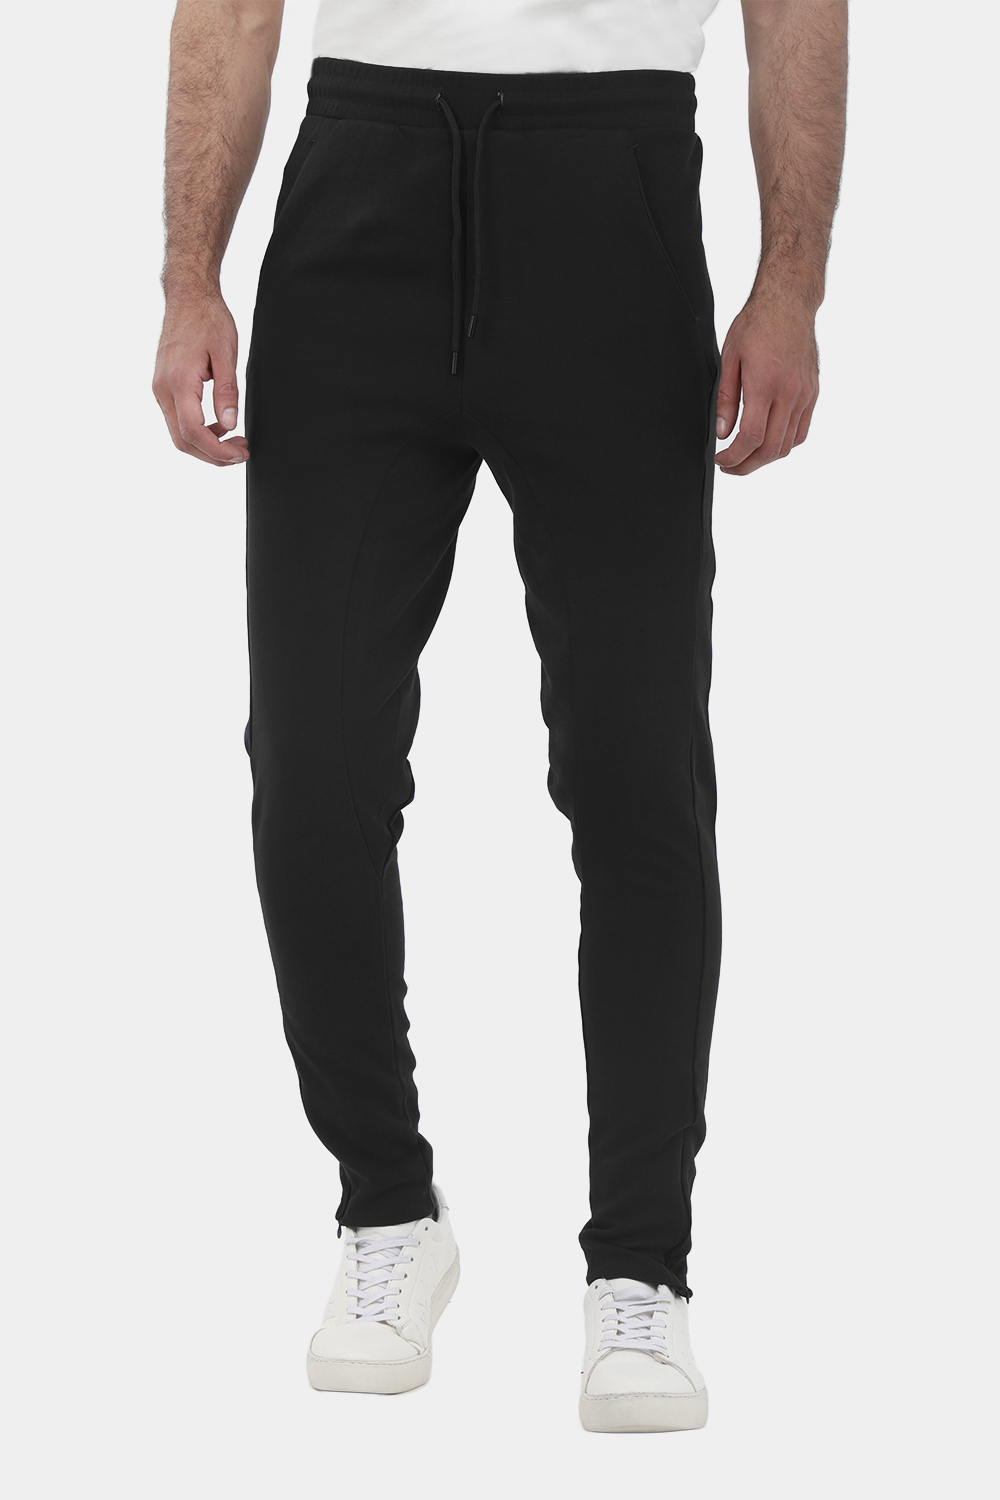 MARCO Modern Fit Black 5 Pocket Pants